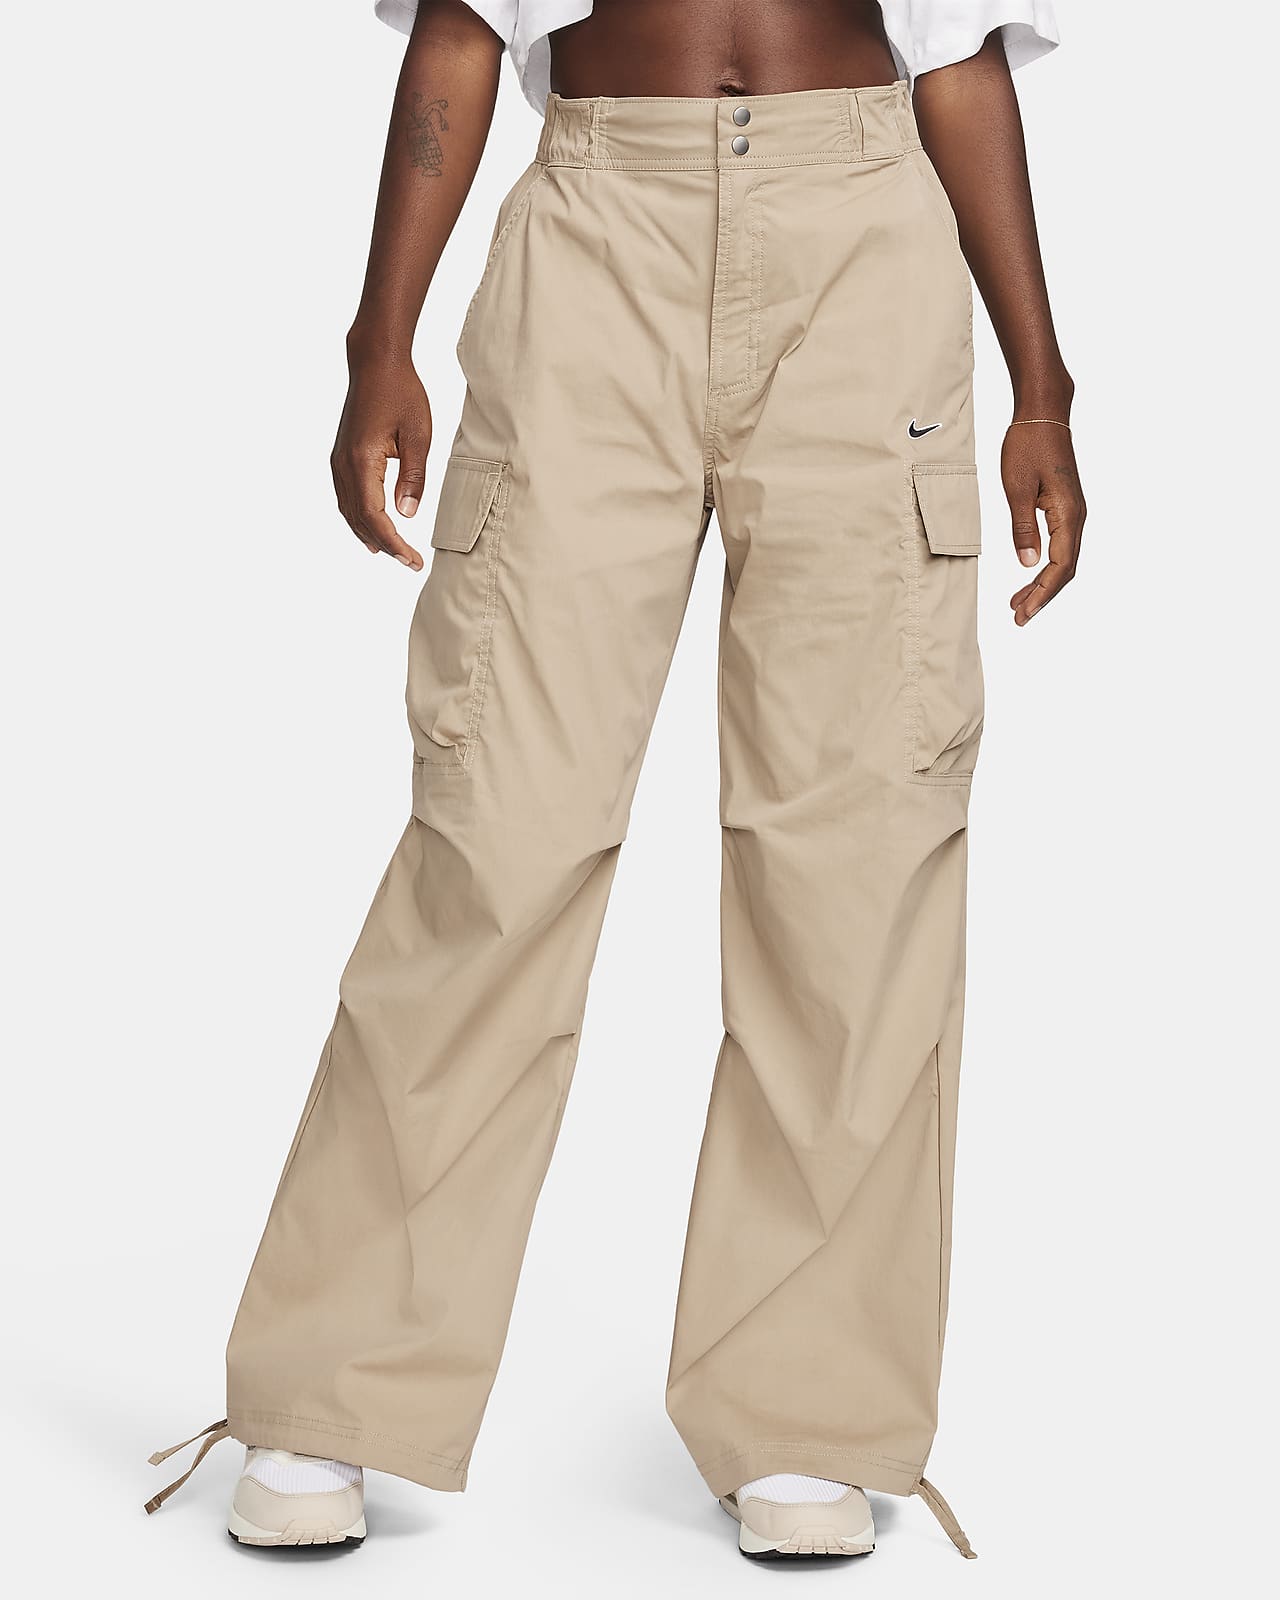 Nike Sportswear Pantalons cargo amples de cintura alta i teixit Woven - Dona